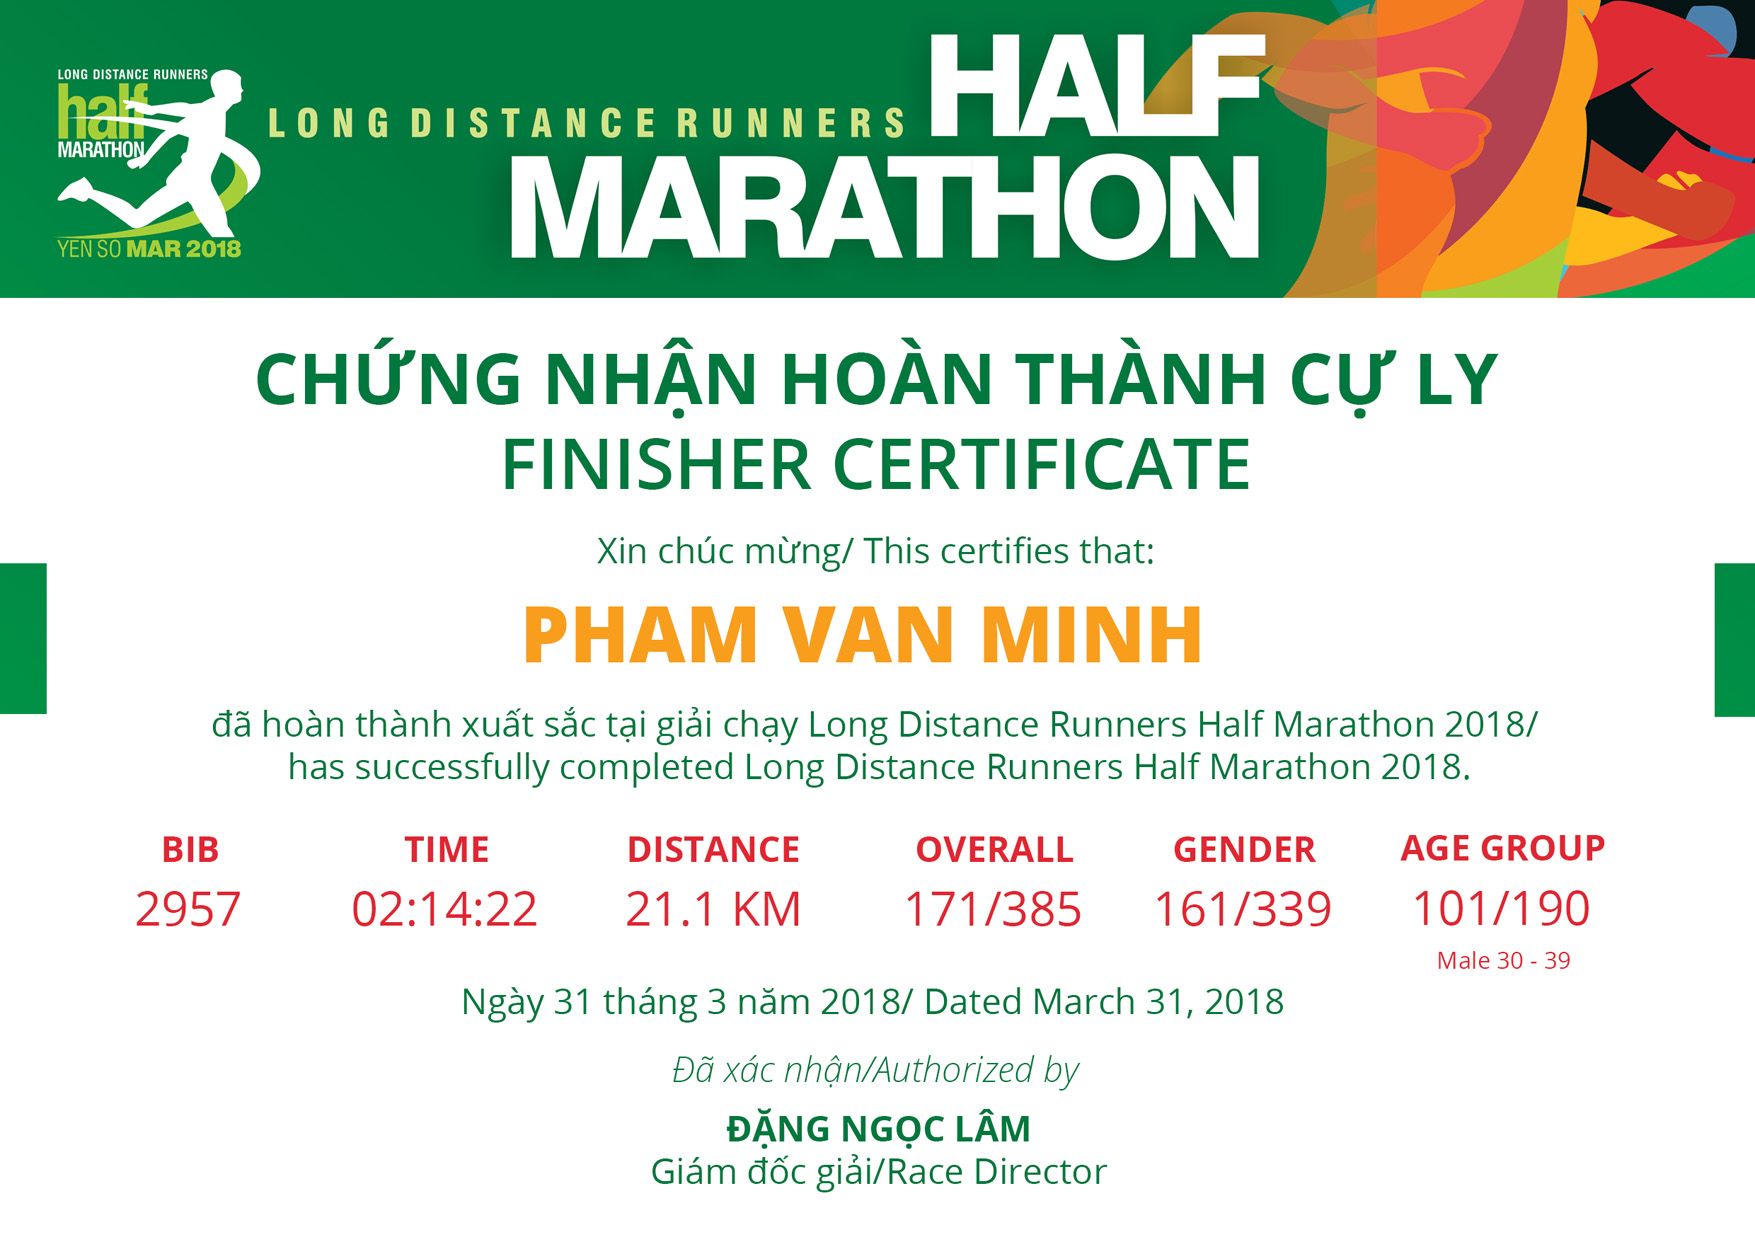 2957 - Pham Van Minh